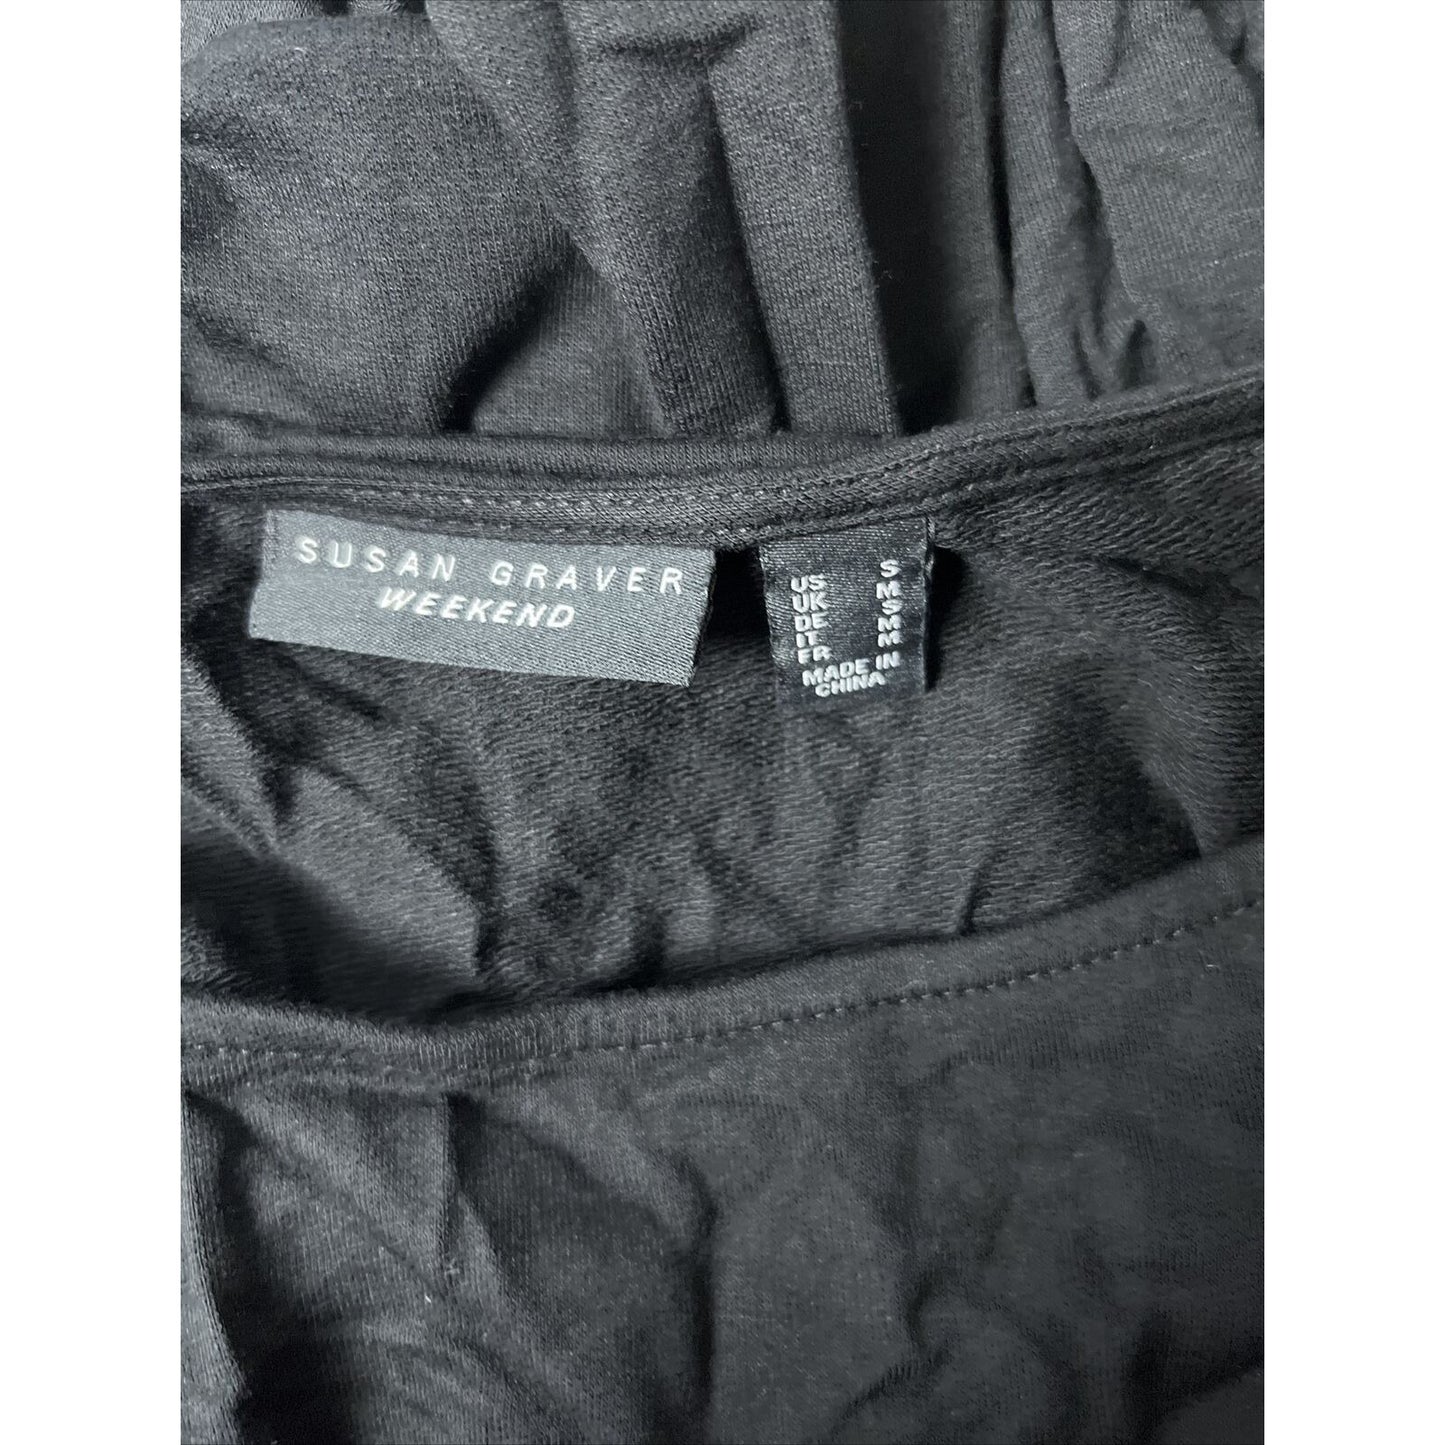 Susan Graver Weekend Cozy Jersey Knit Hi-Lo Hem Top Pockets Women's Sz S Black